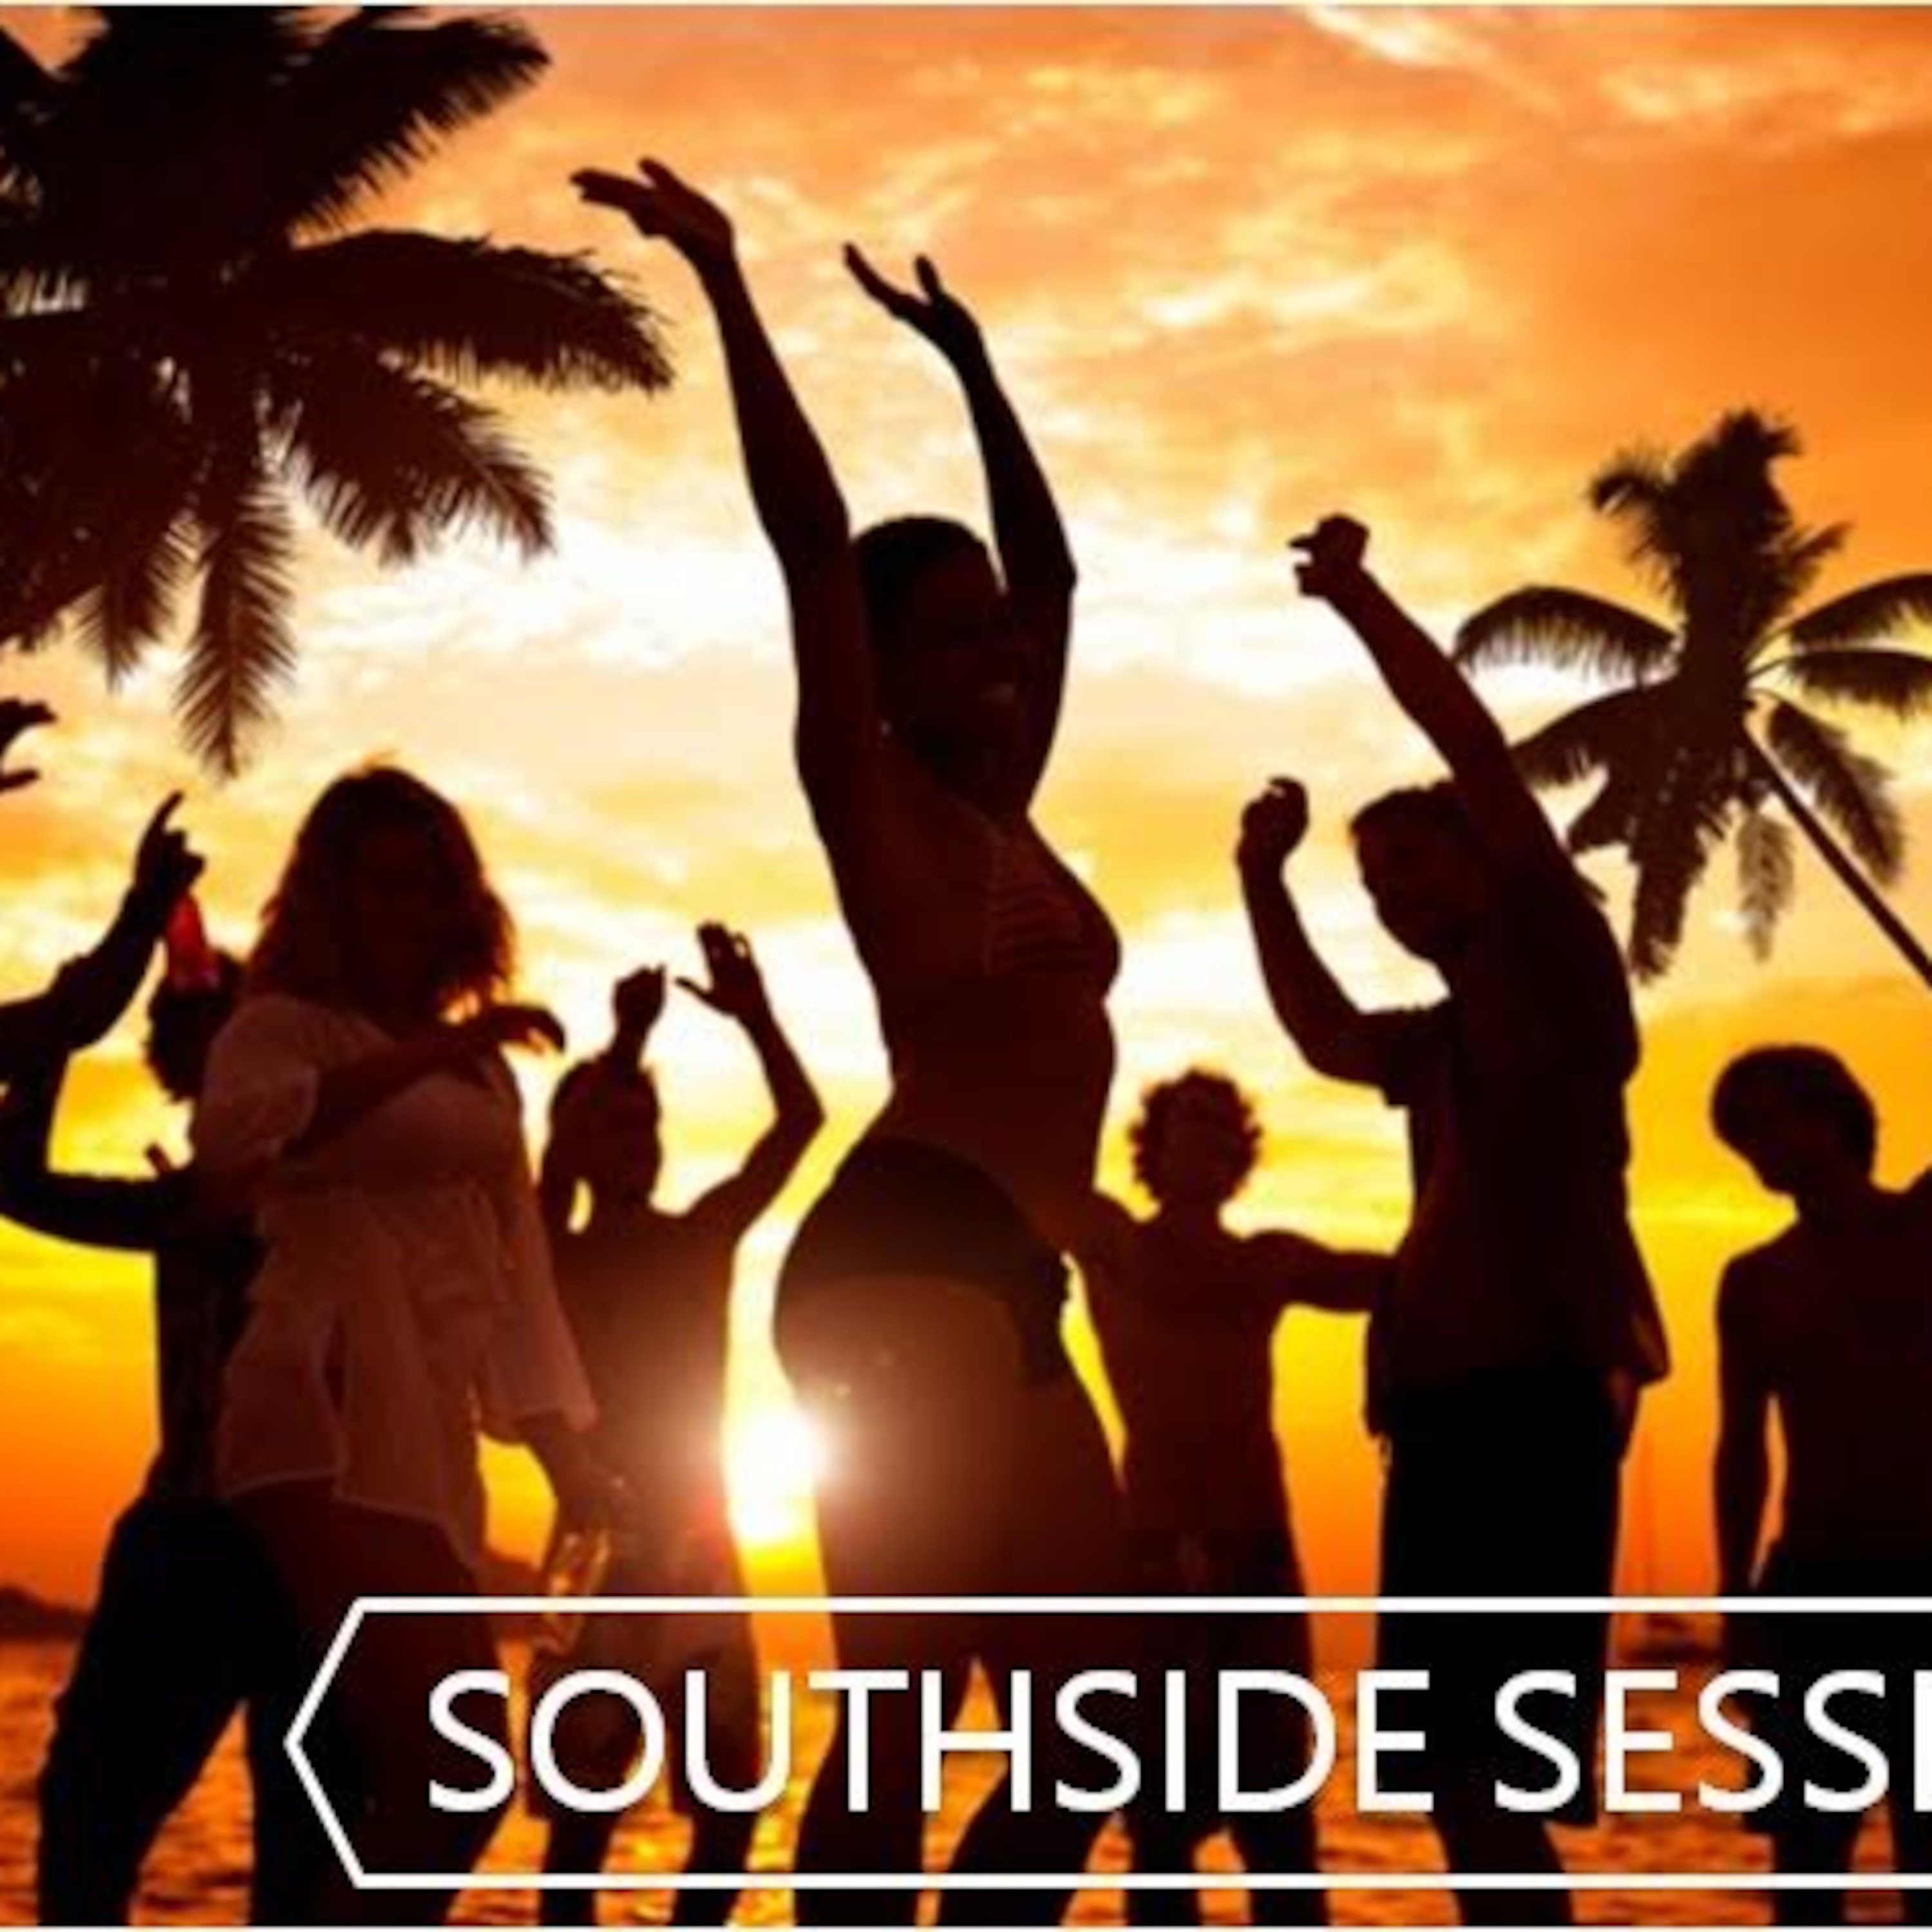 Episode 94 The Southside Sessions 18/07/19 live on pressureradio.com